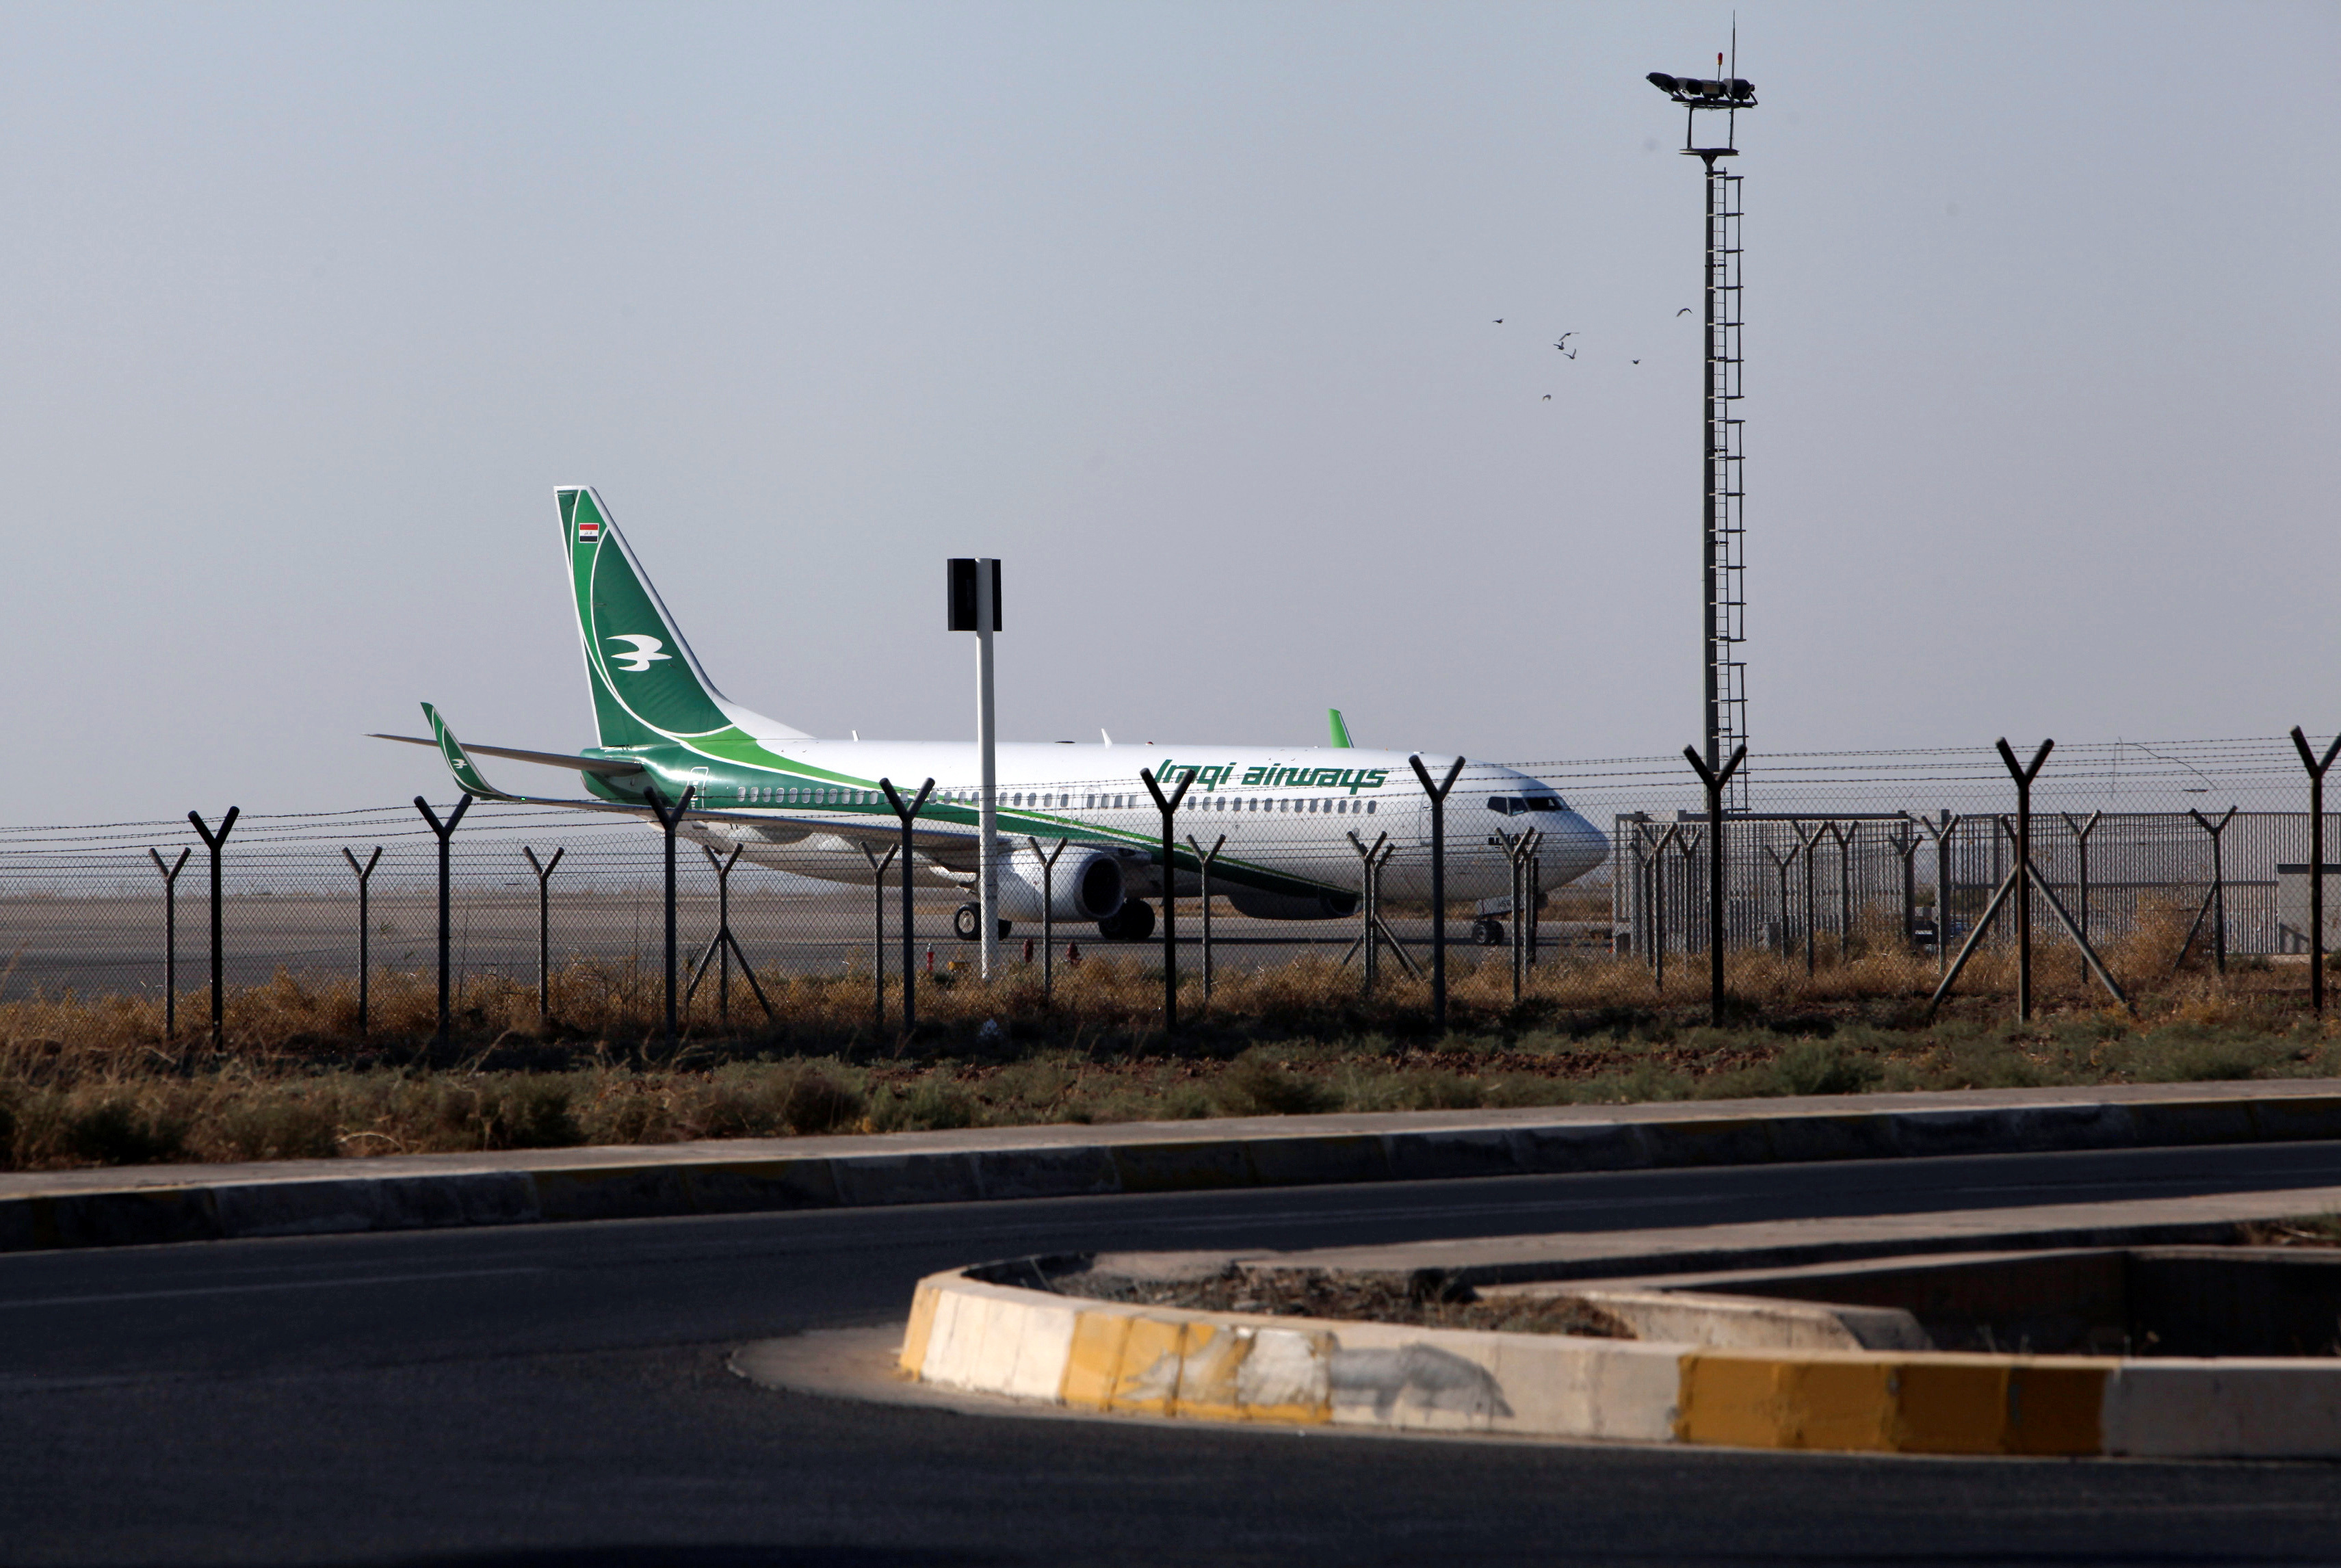 An Iraqi Airways plane is seen at the Erbil International Airport in Erbil